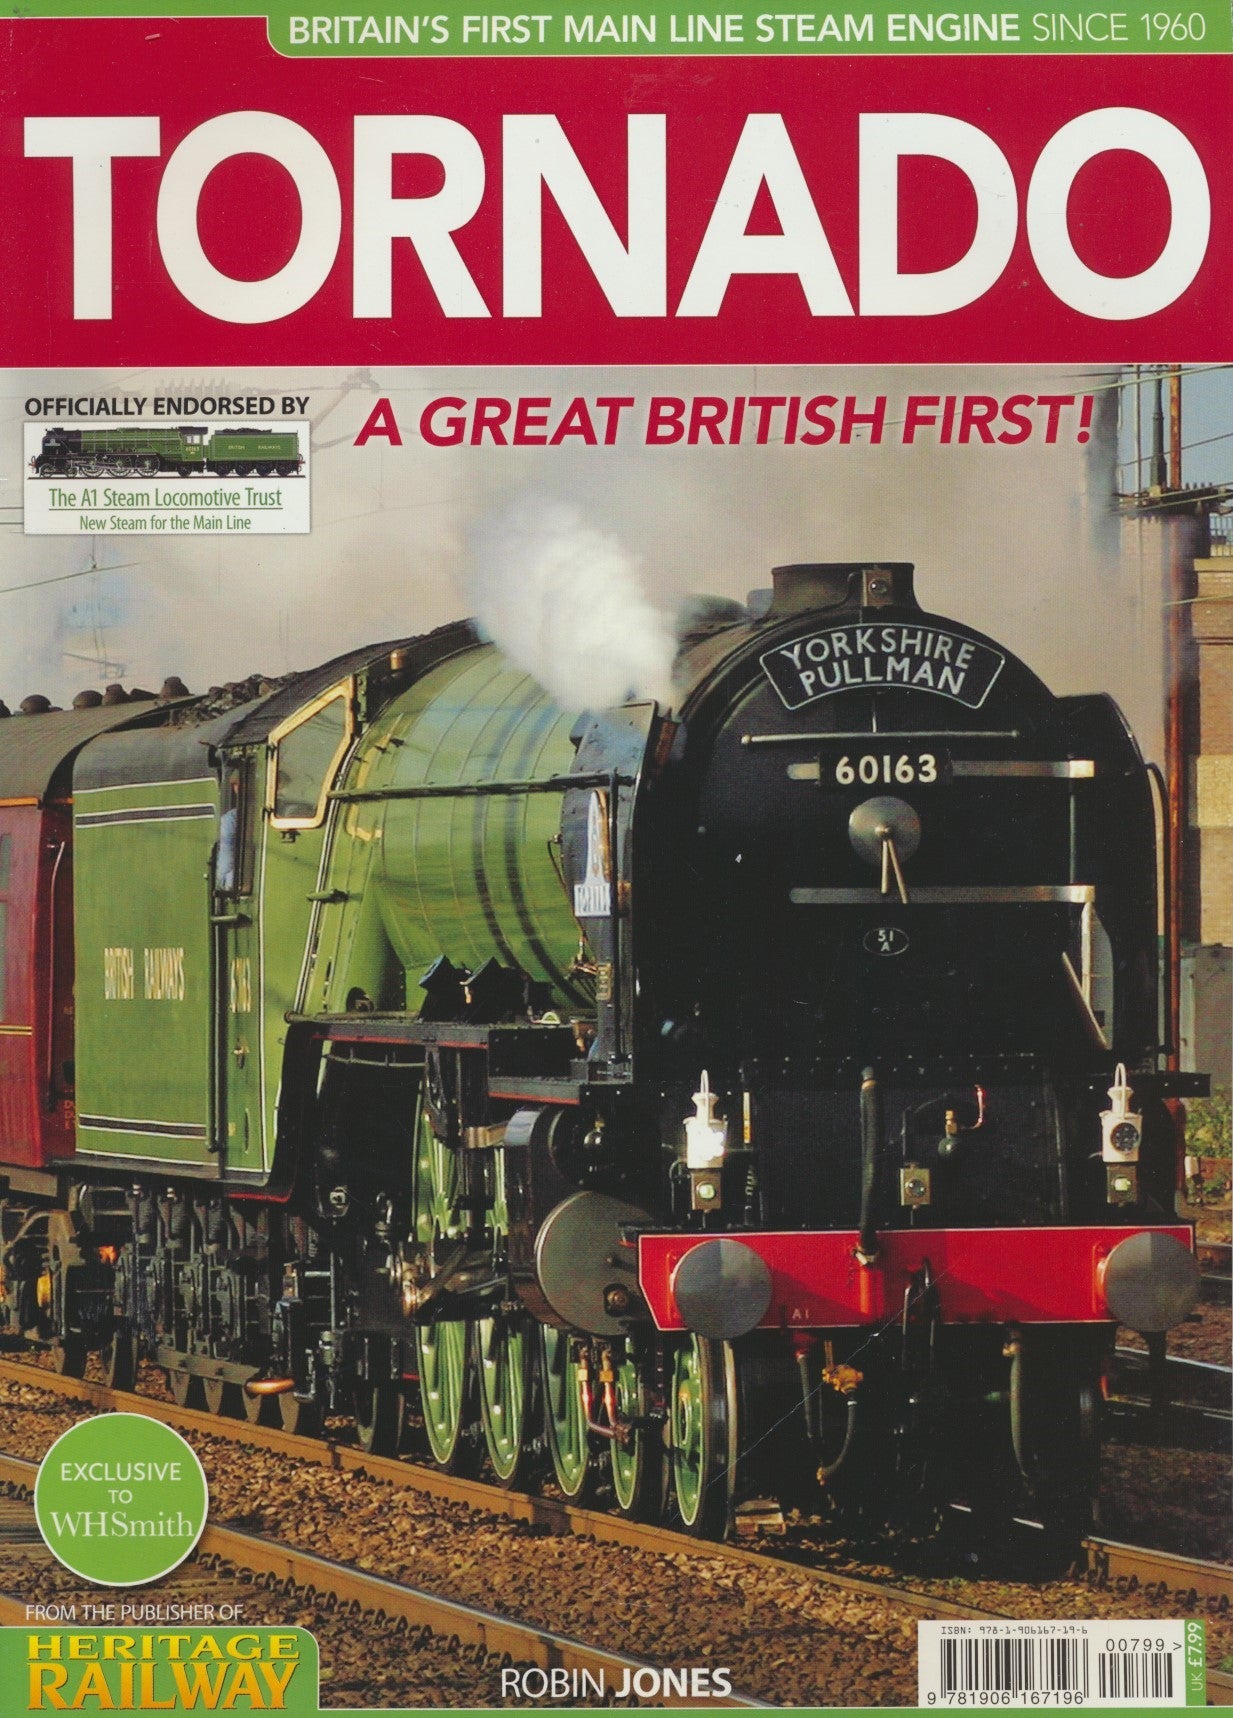 Tornado - A Great British First